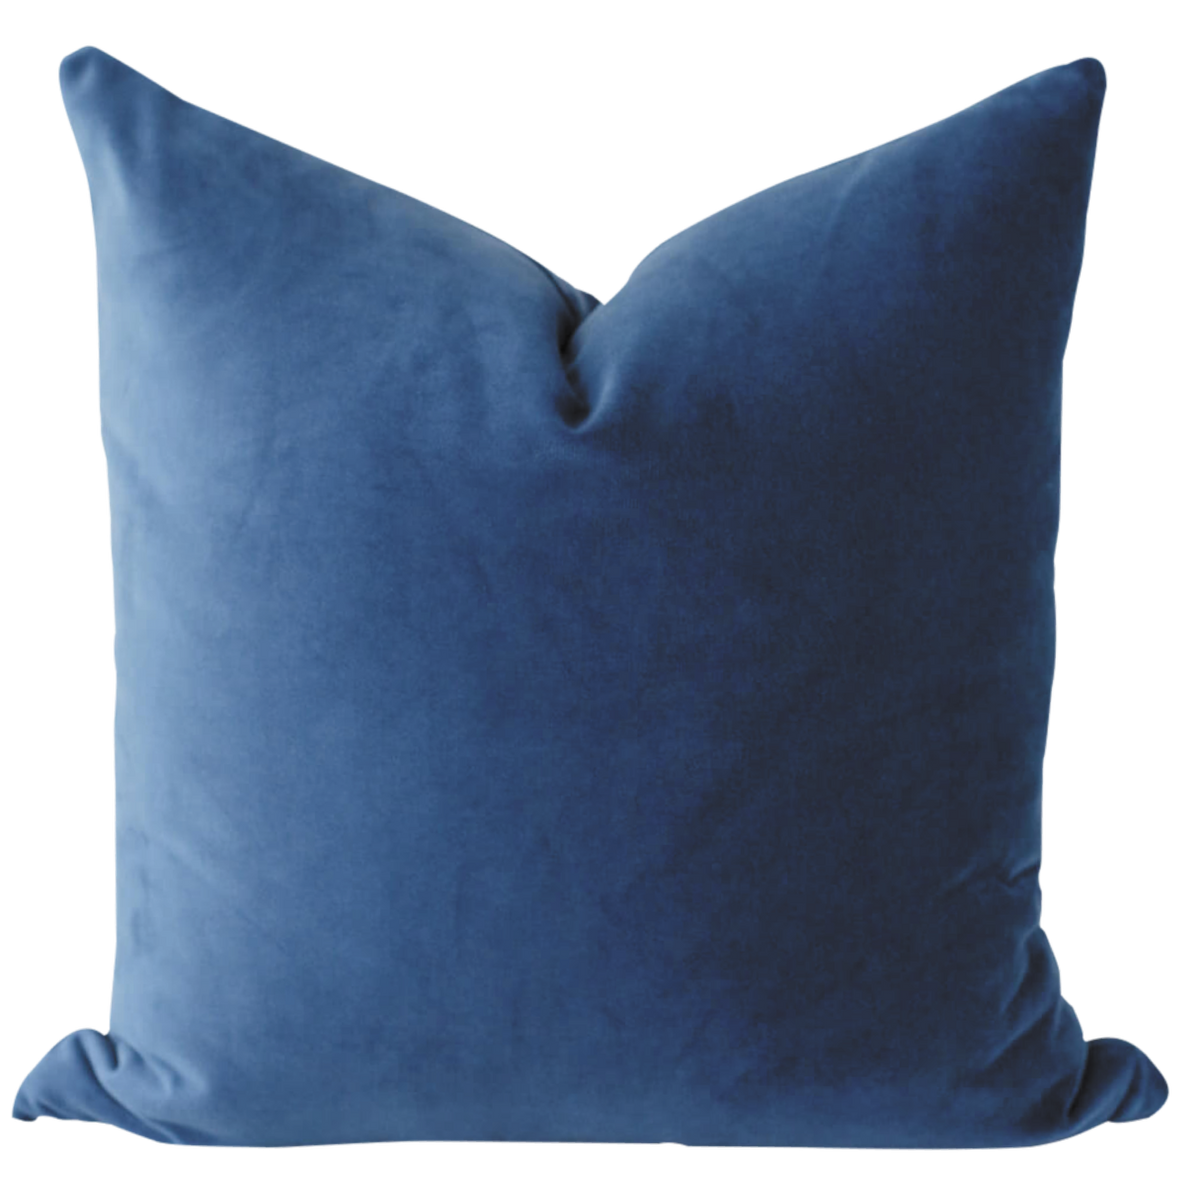 Cobalt Blue Pillow Cover